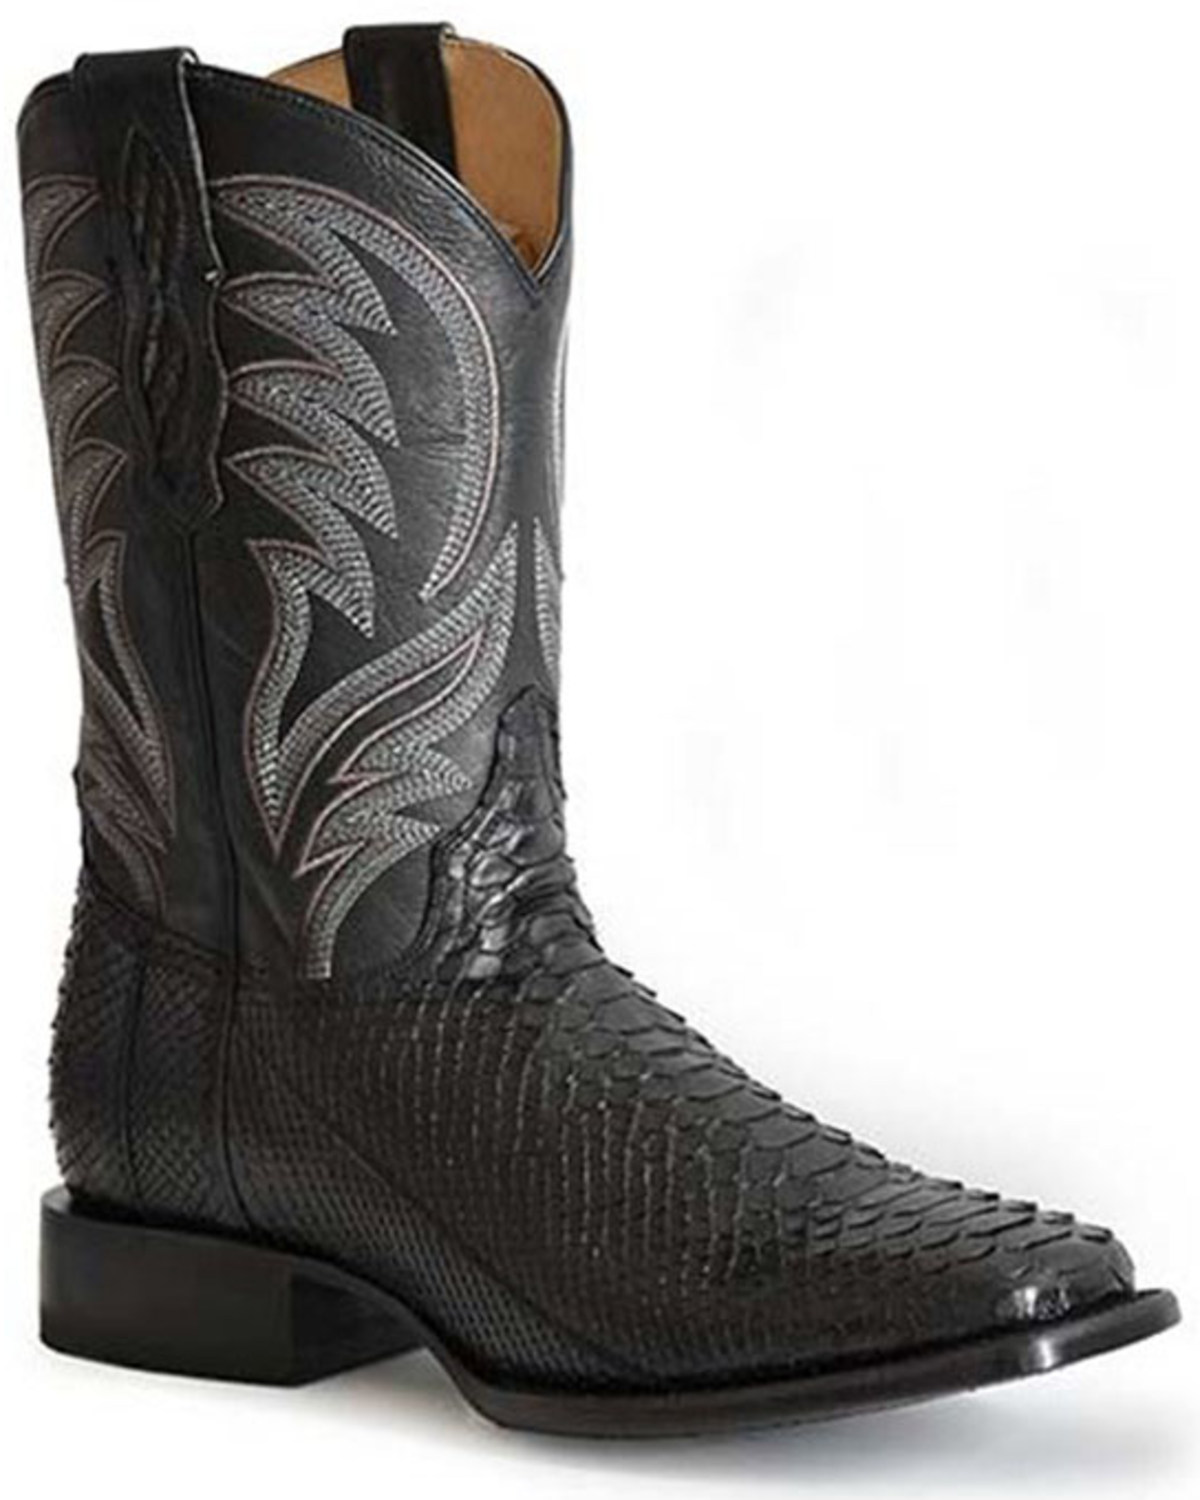 Roper Men's Peyton Exotic Python Skin Western Boots - Square Toe